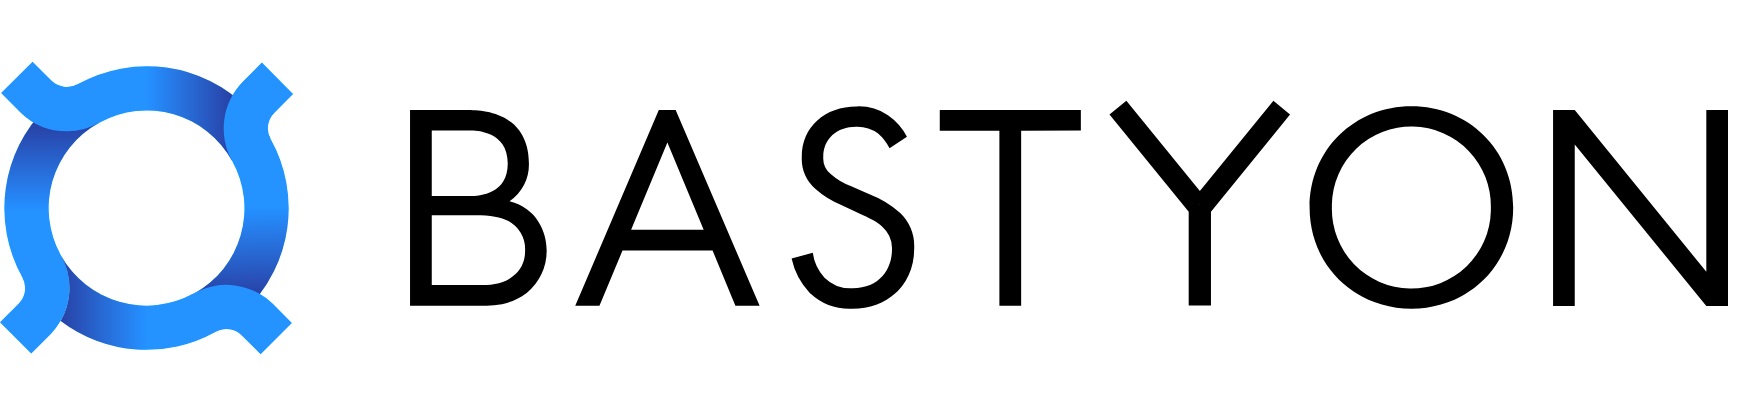 Https bastyon com. Bastyon. Бастион соц сеть. Bastyon.com. Сеть Бастион логотип.